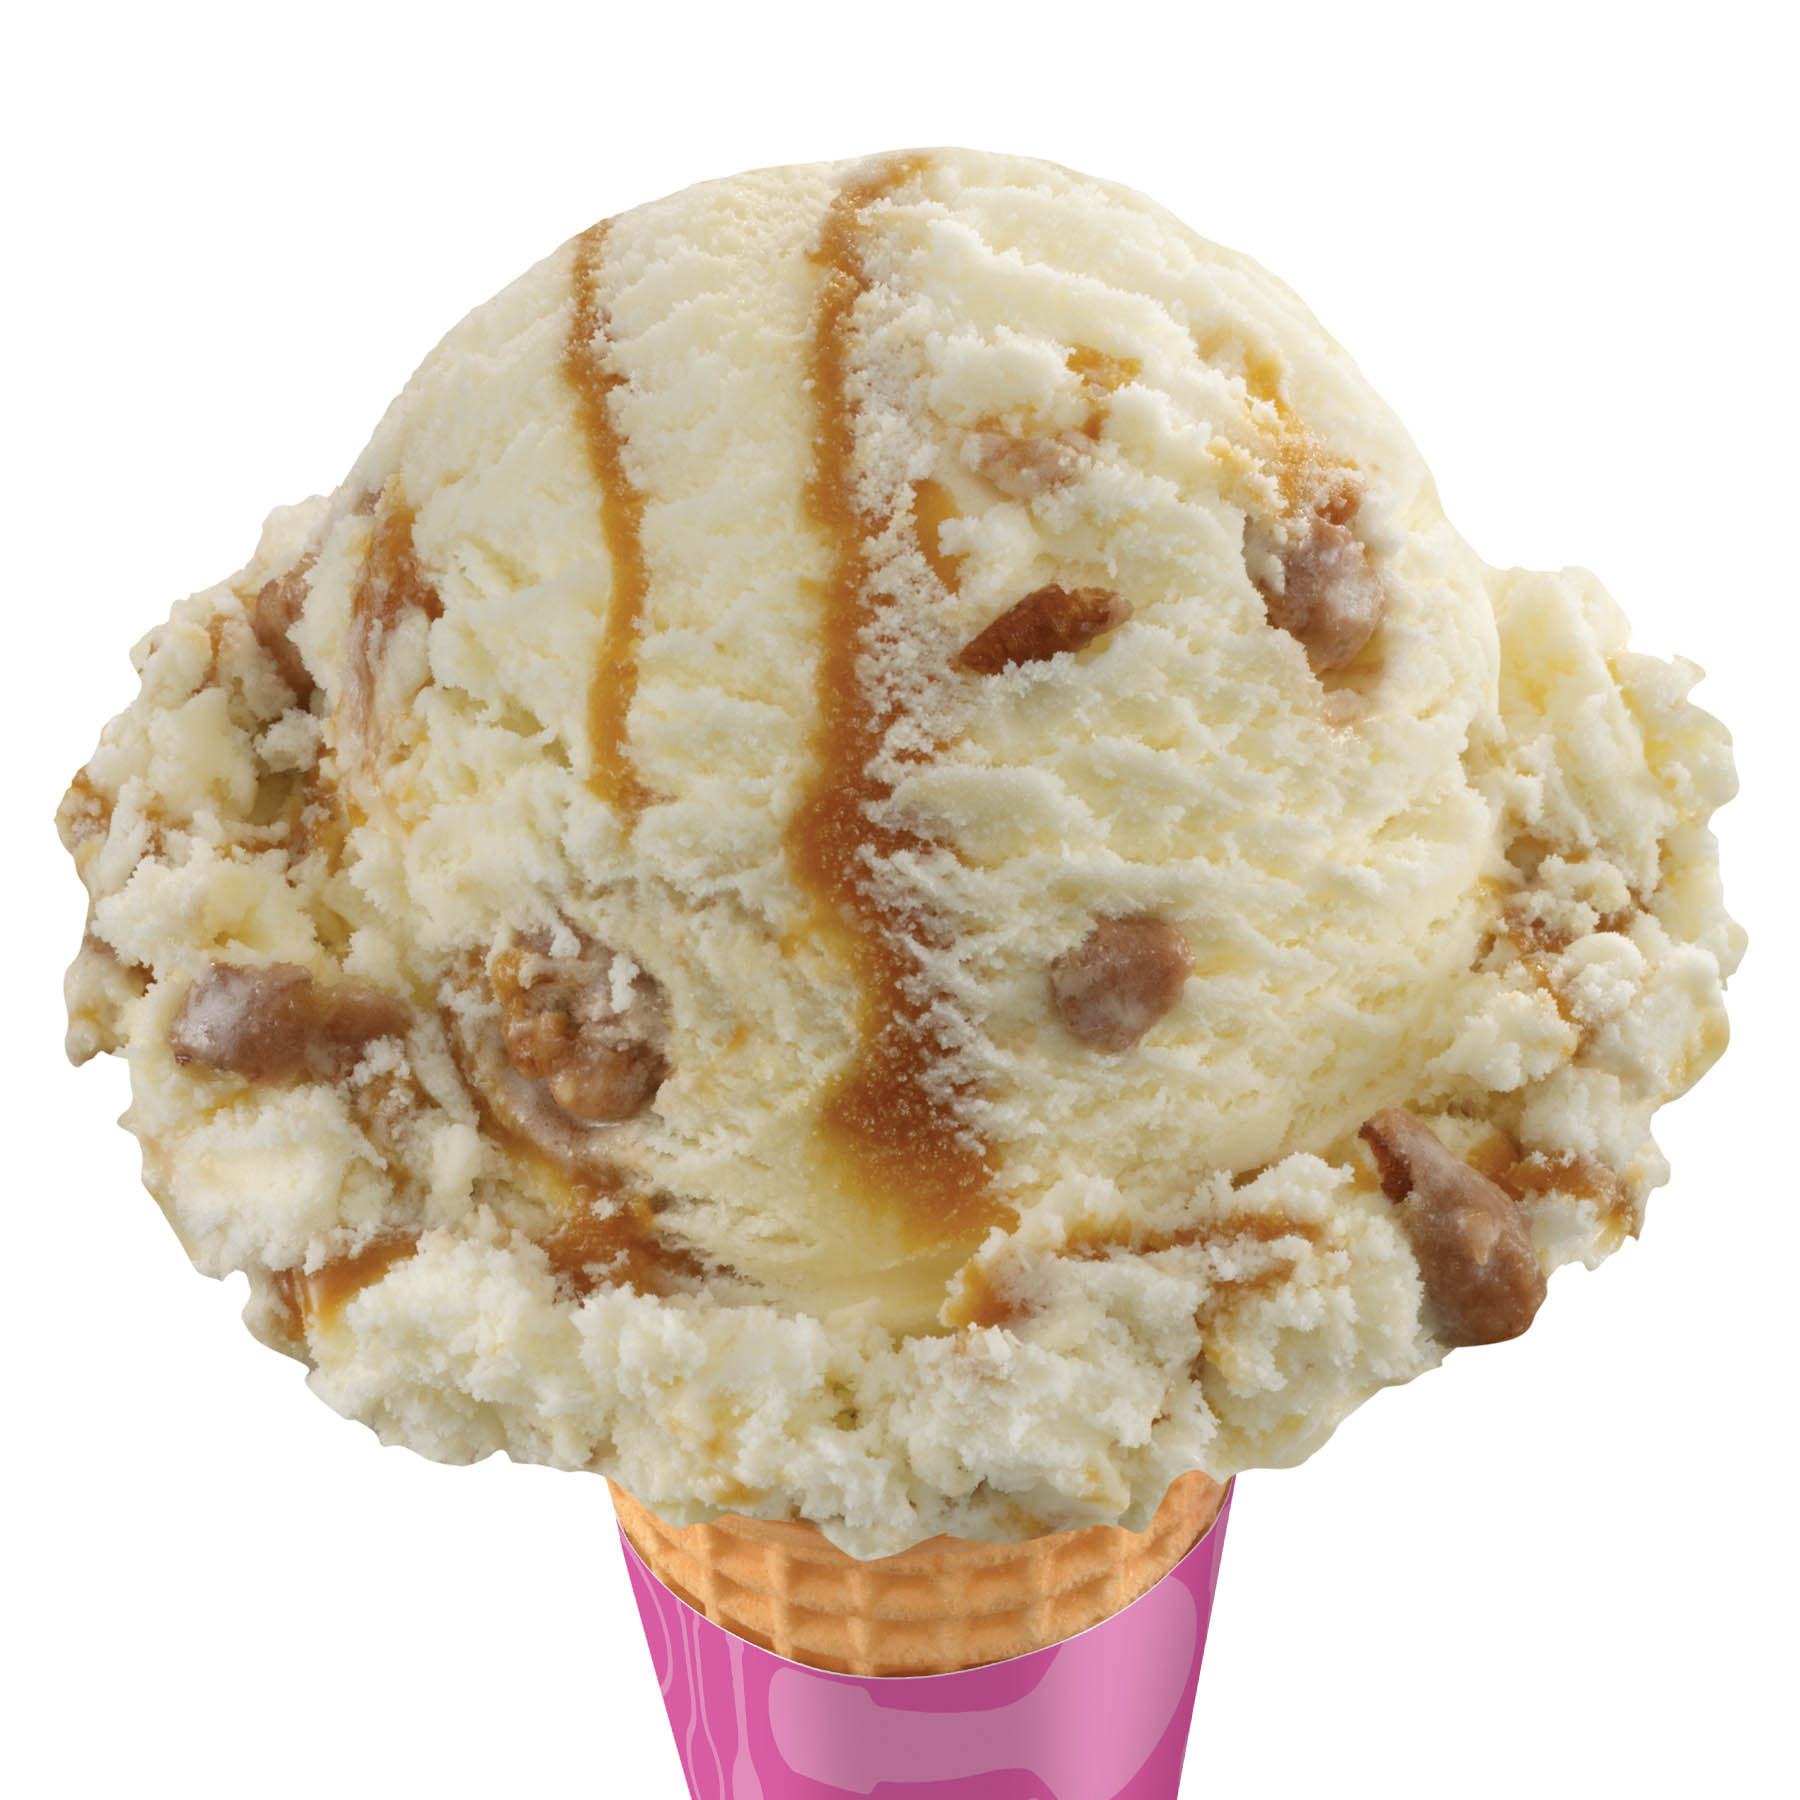 10 must-try ice cream flavors of Baskin-Robbins - MegaBites Ice Cream Flavors Pictures